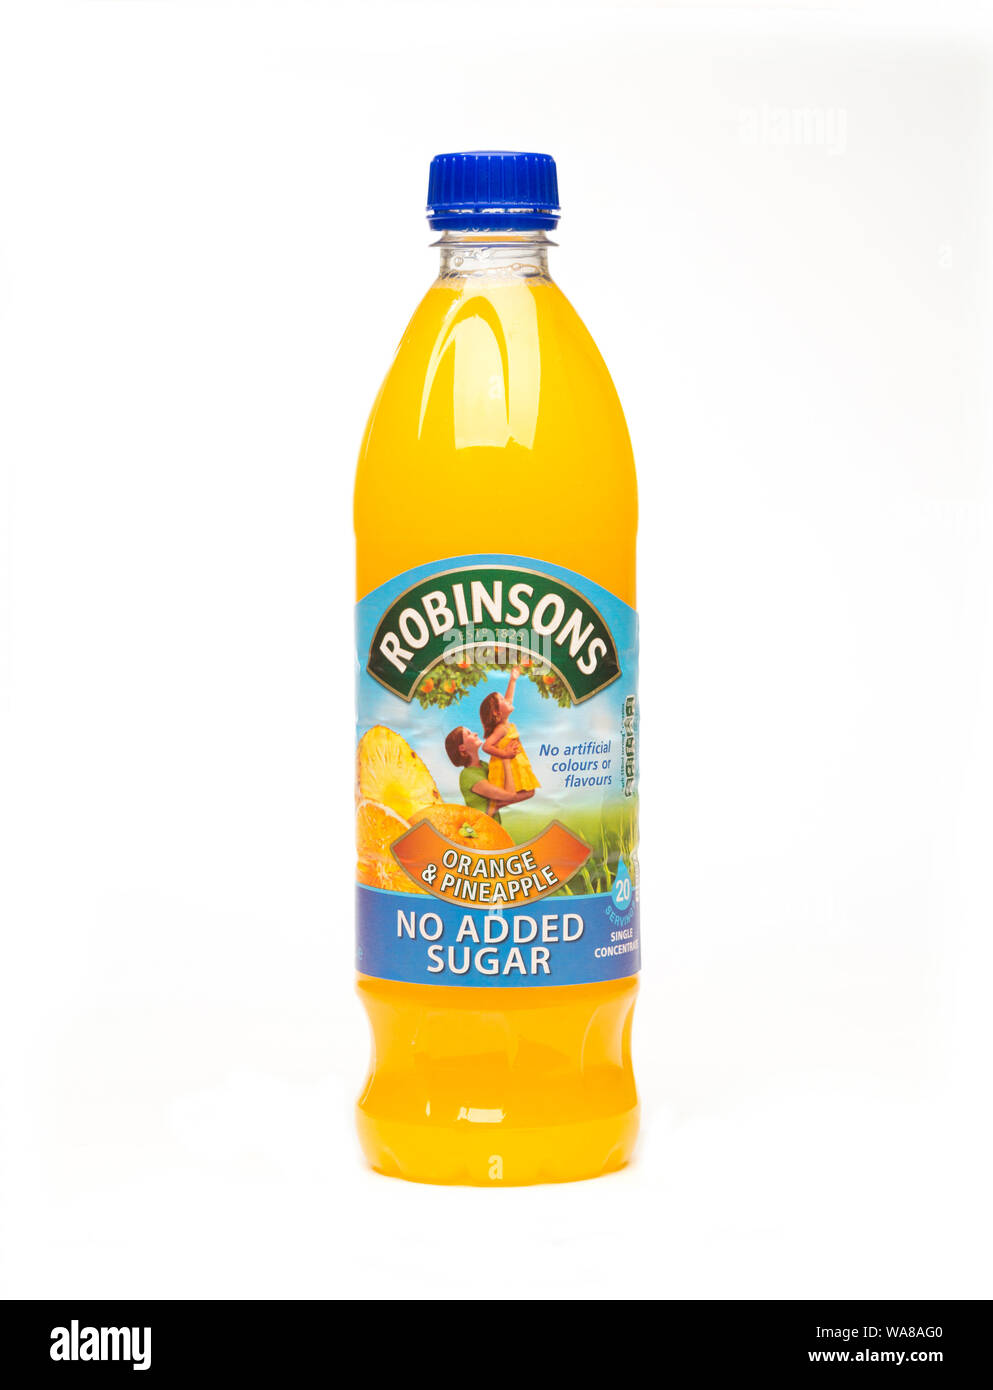 Robinsons Orange & Pineapple fruit drink bottle Stock Photo